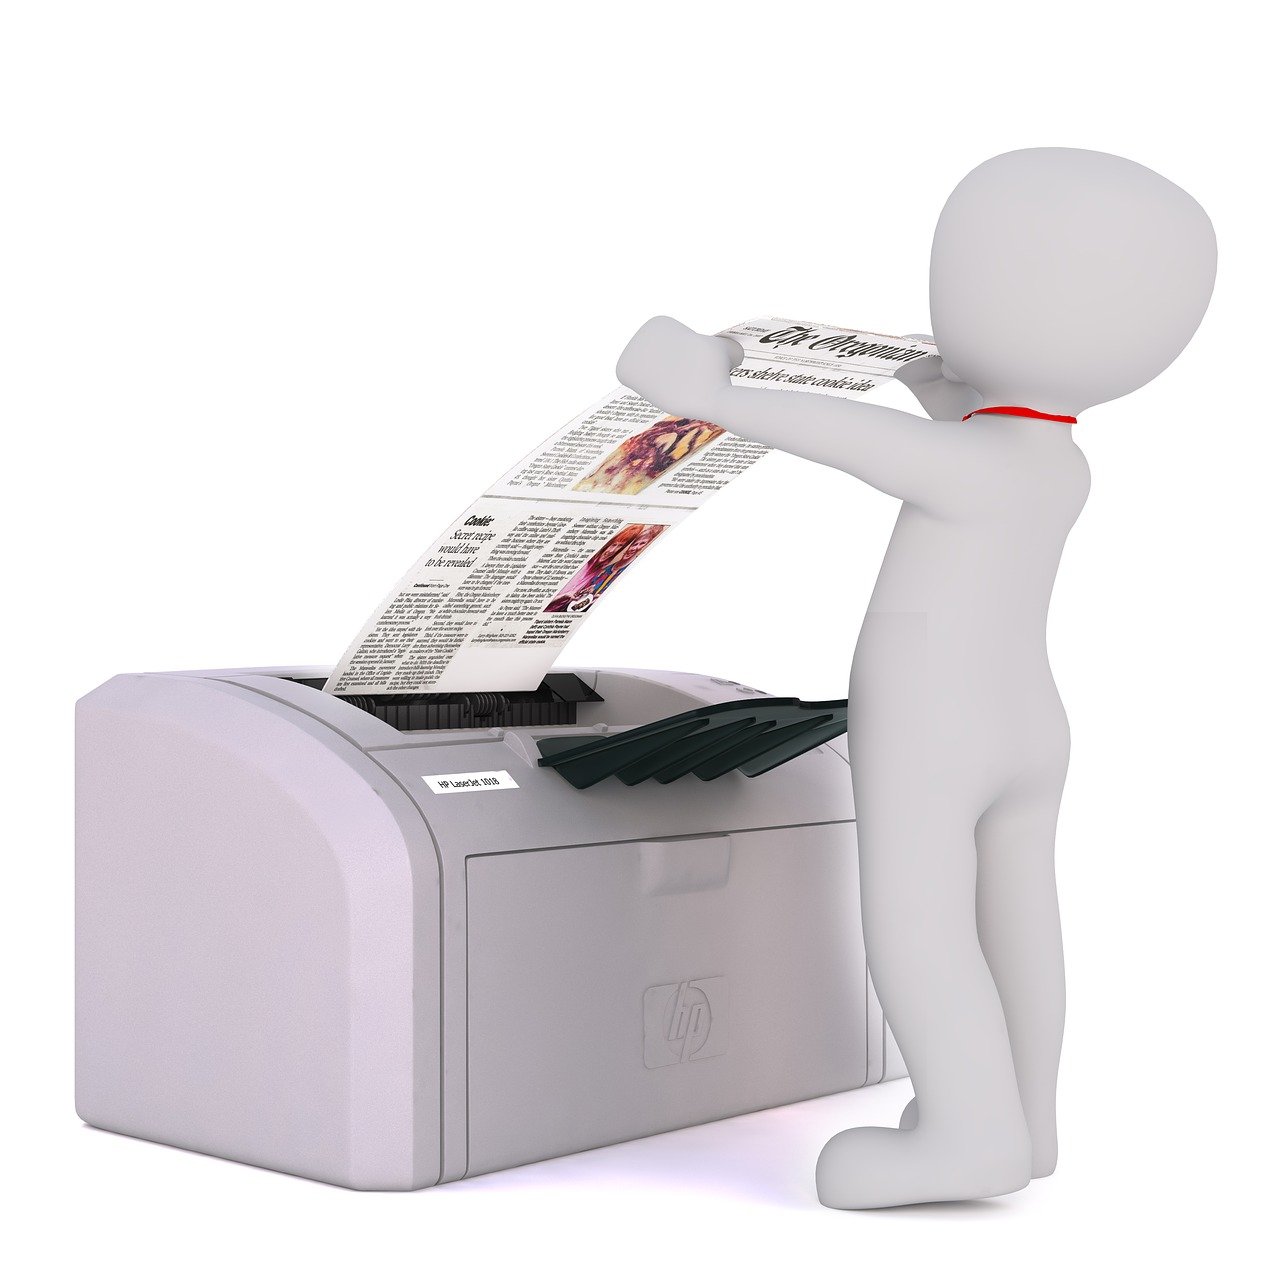 Printer troubleshooting